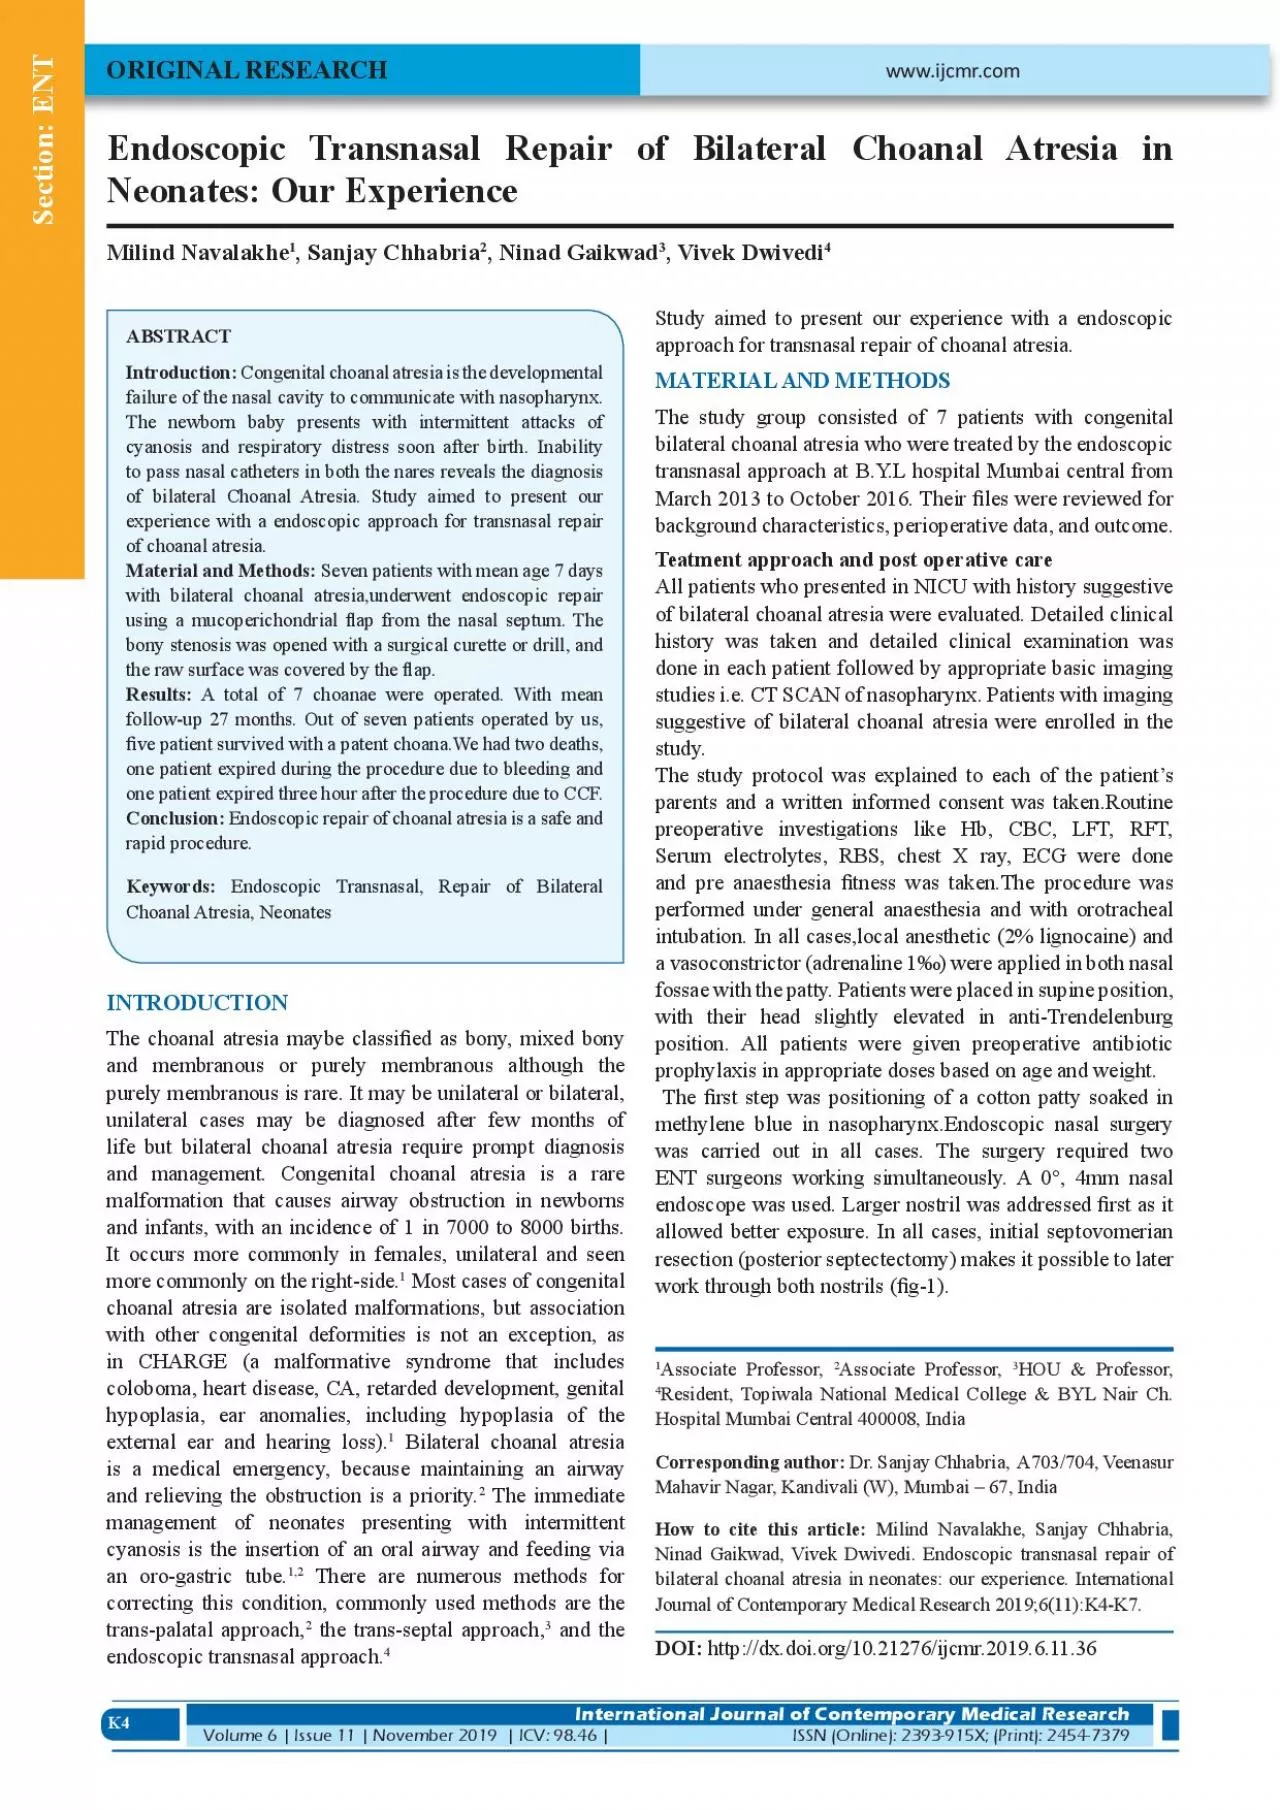 Endoscopic Transnasal Repair of Bilateral Choanal Atresia in